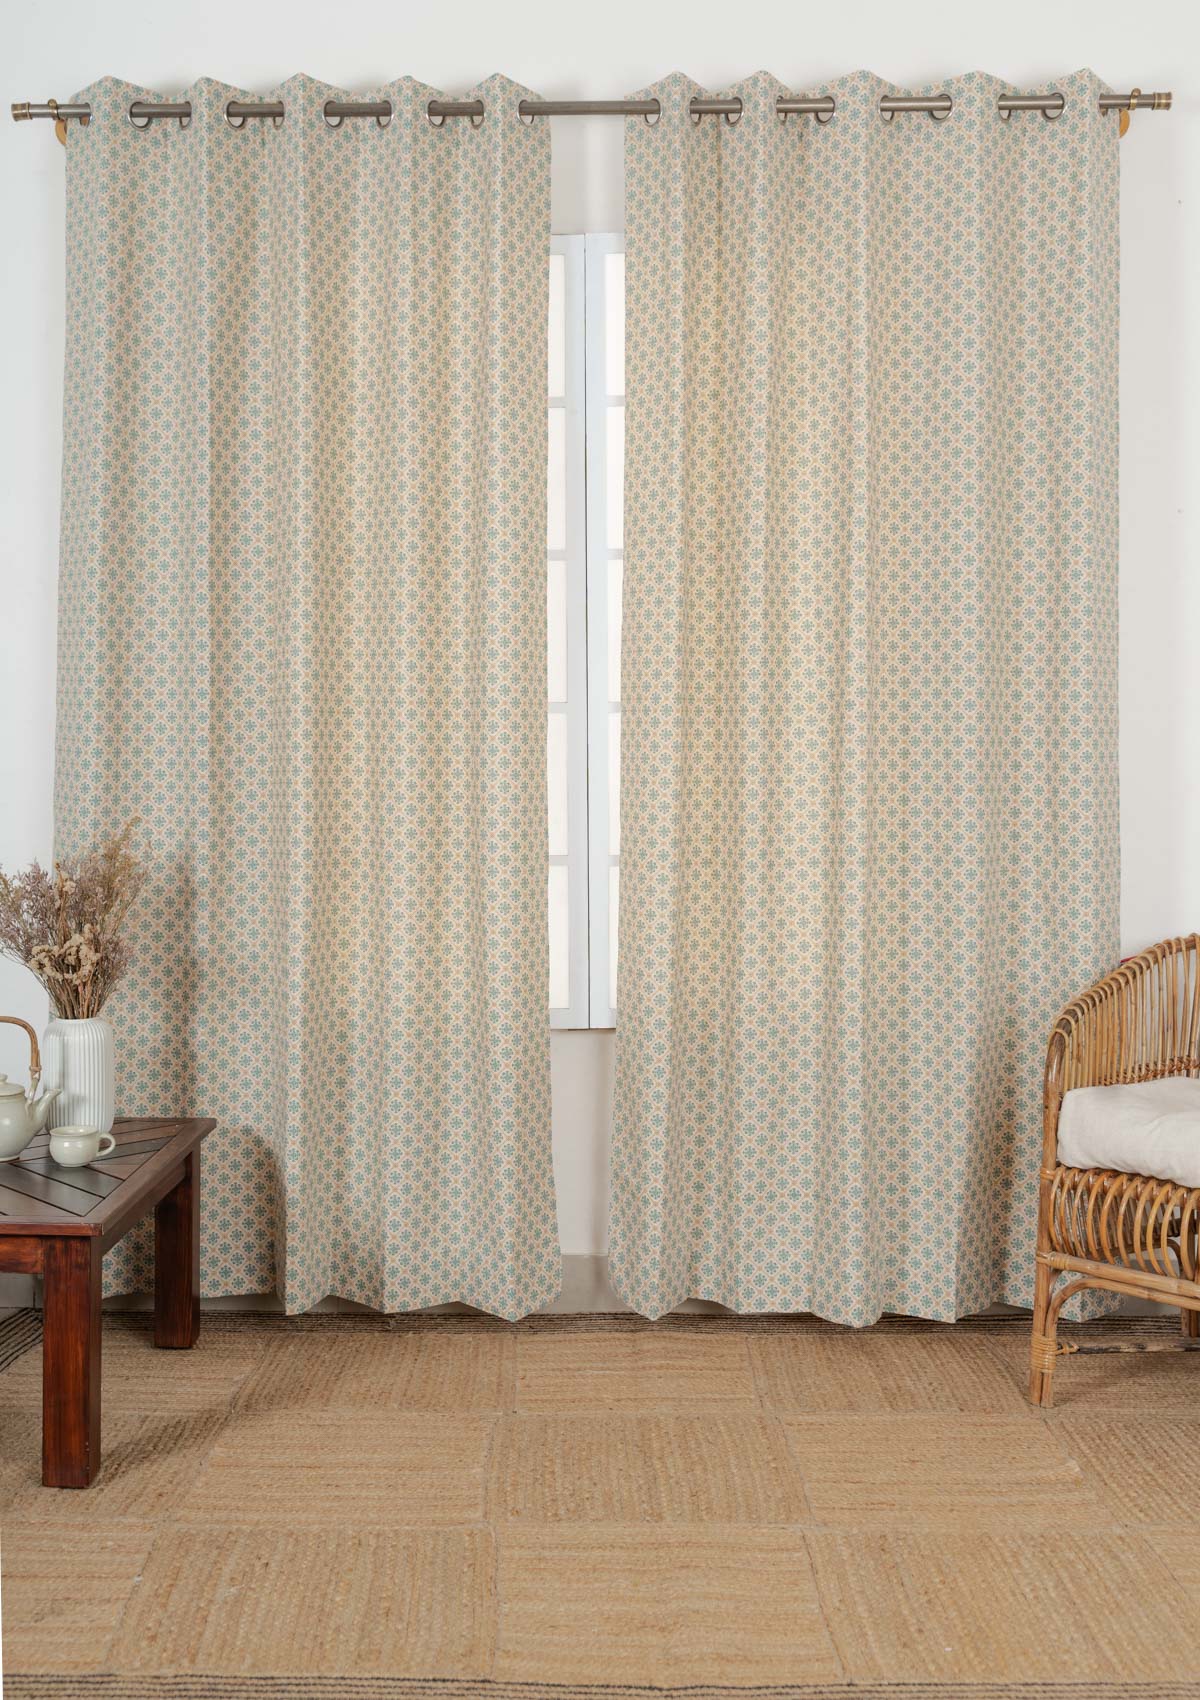 Yura 100% cotton geometric customisable curtain for living room - Room darkening - Aqua blue